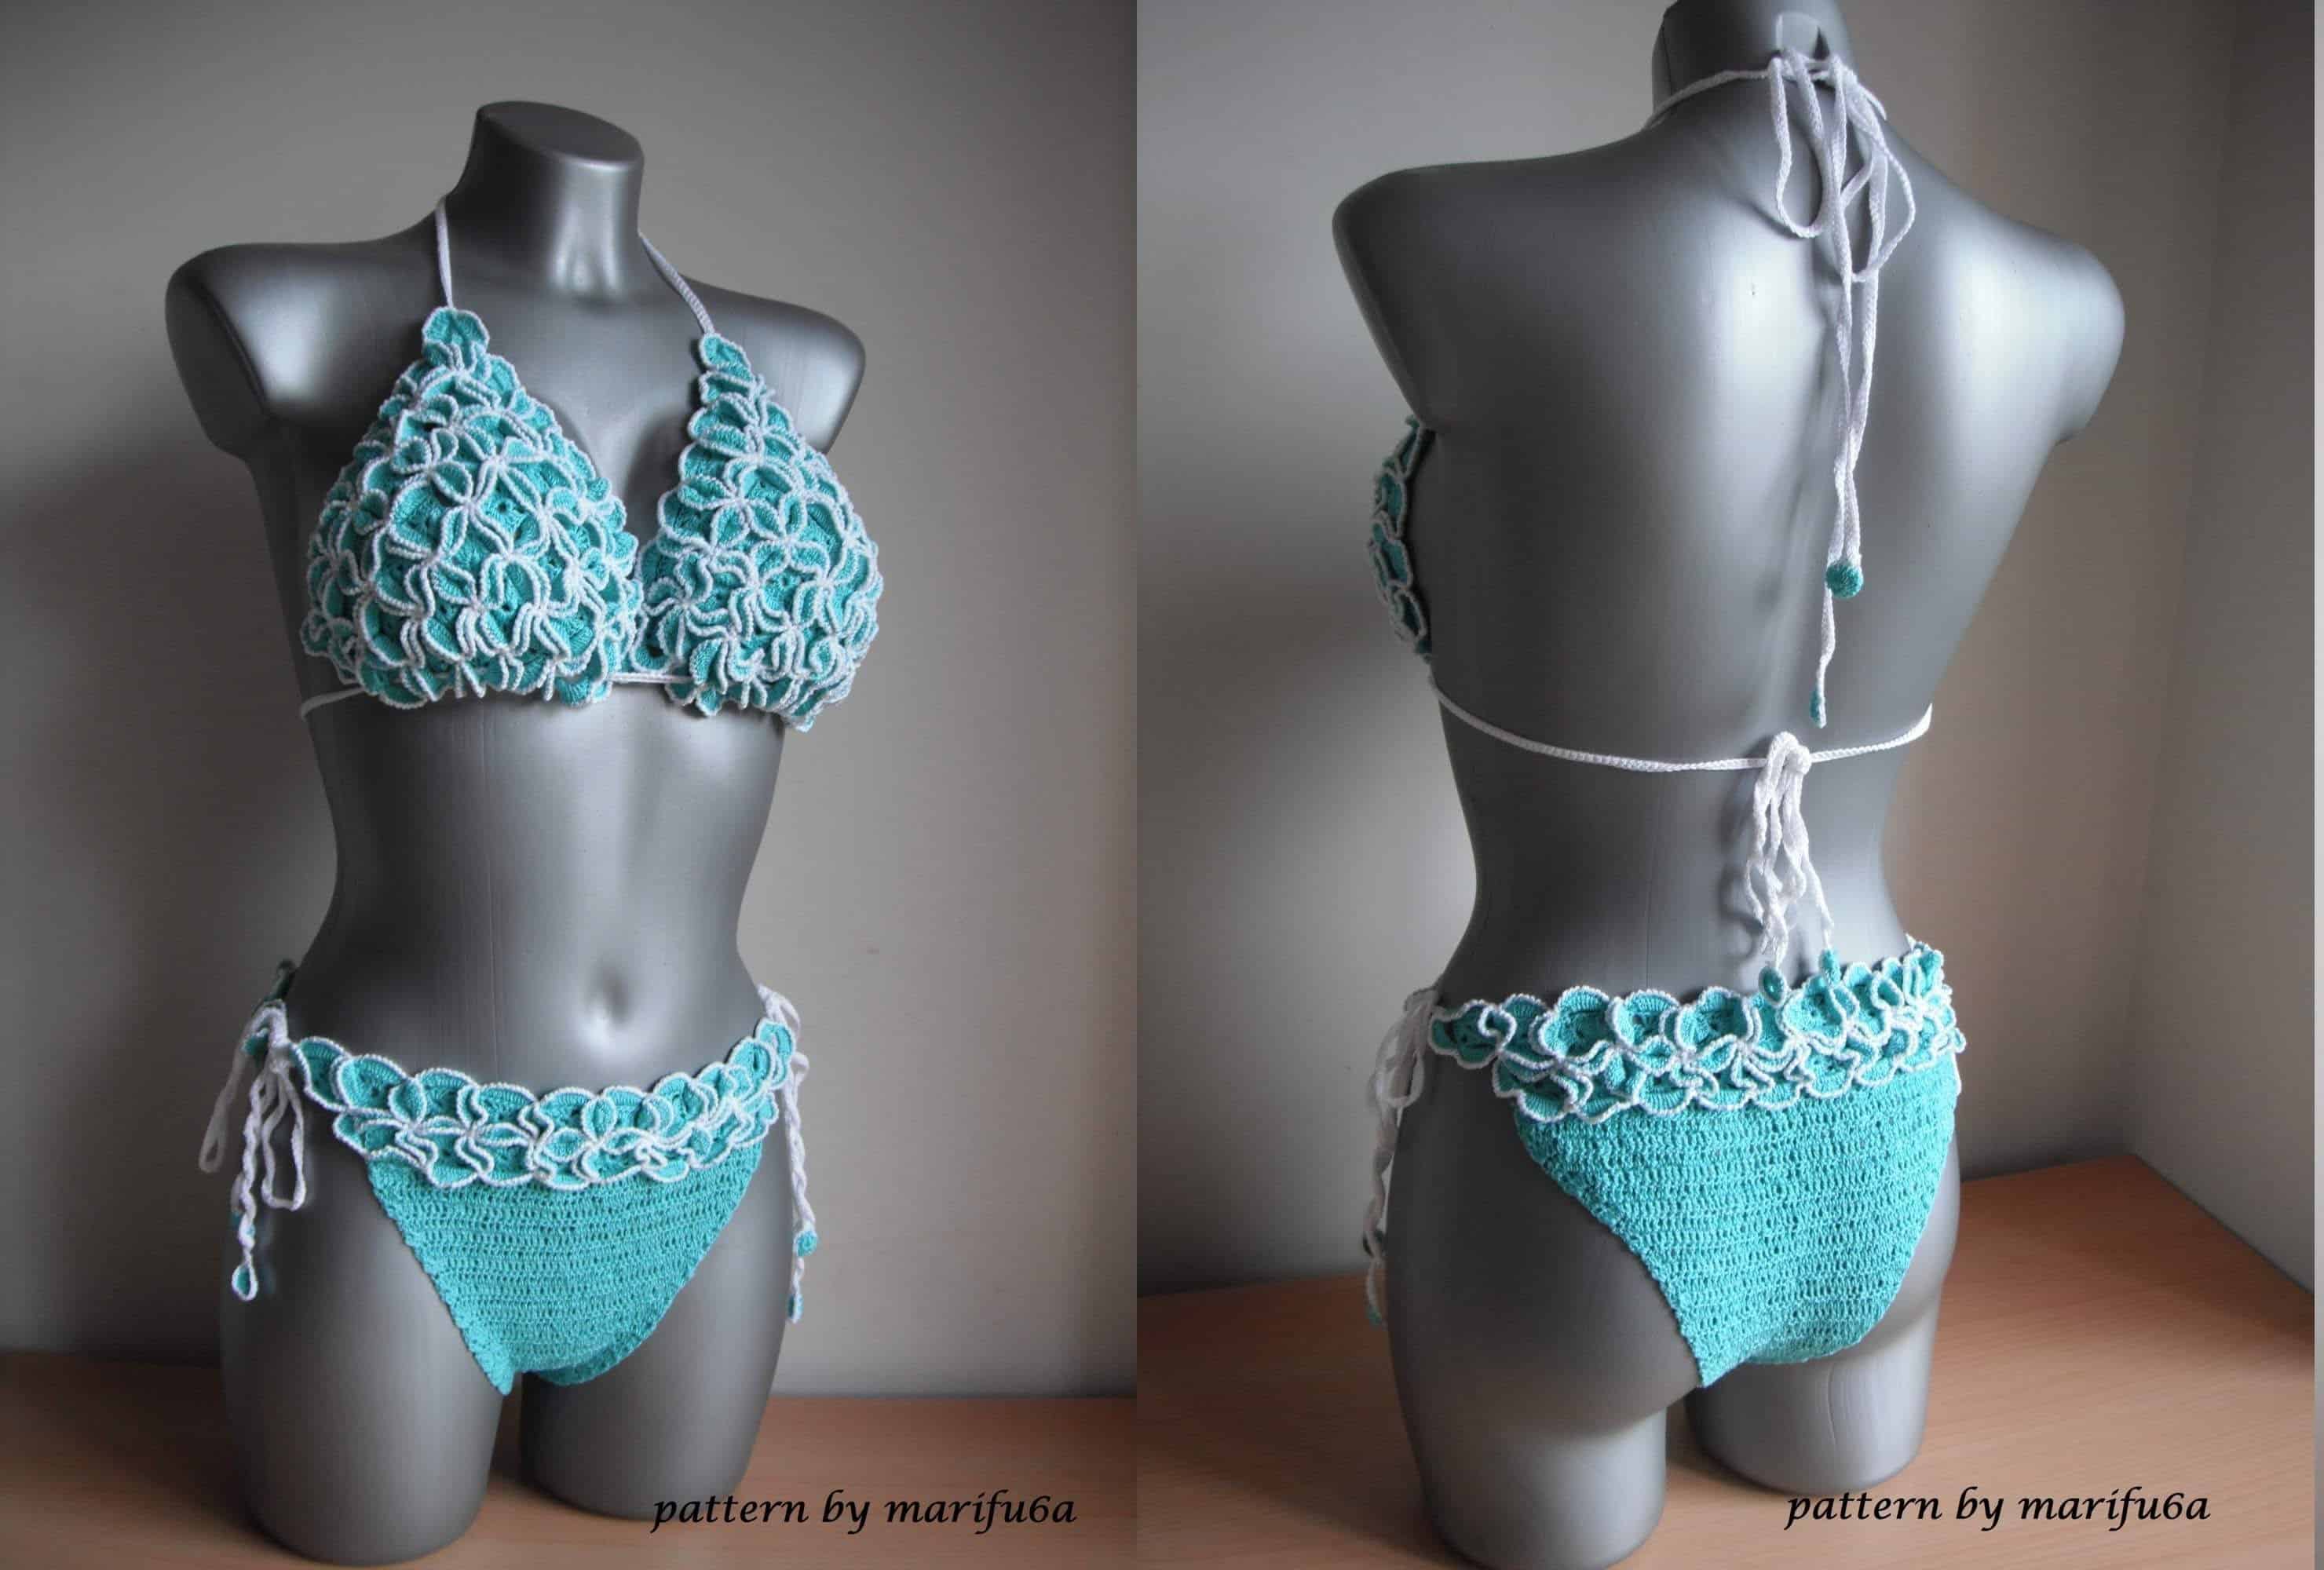 Ruffled crochet bikini with a contrast edging